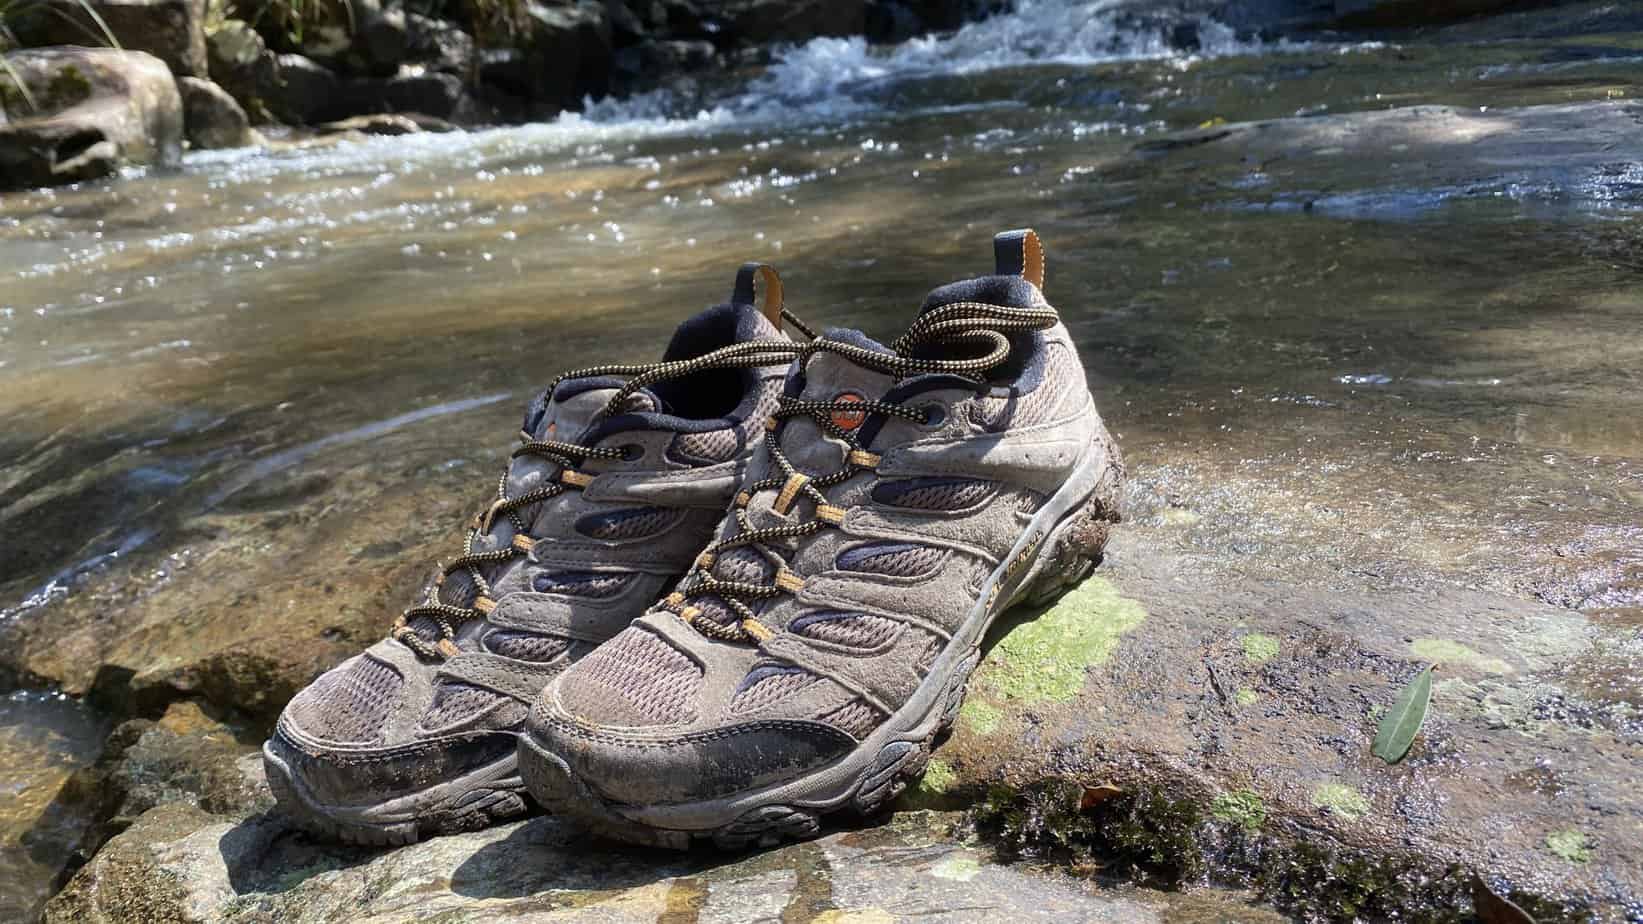 Merrell Bravada 2 Waterproof Women's Walking Shoes